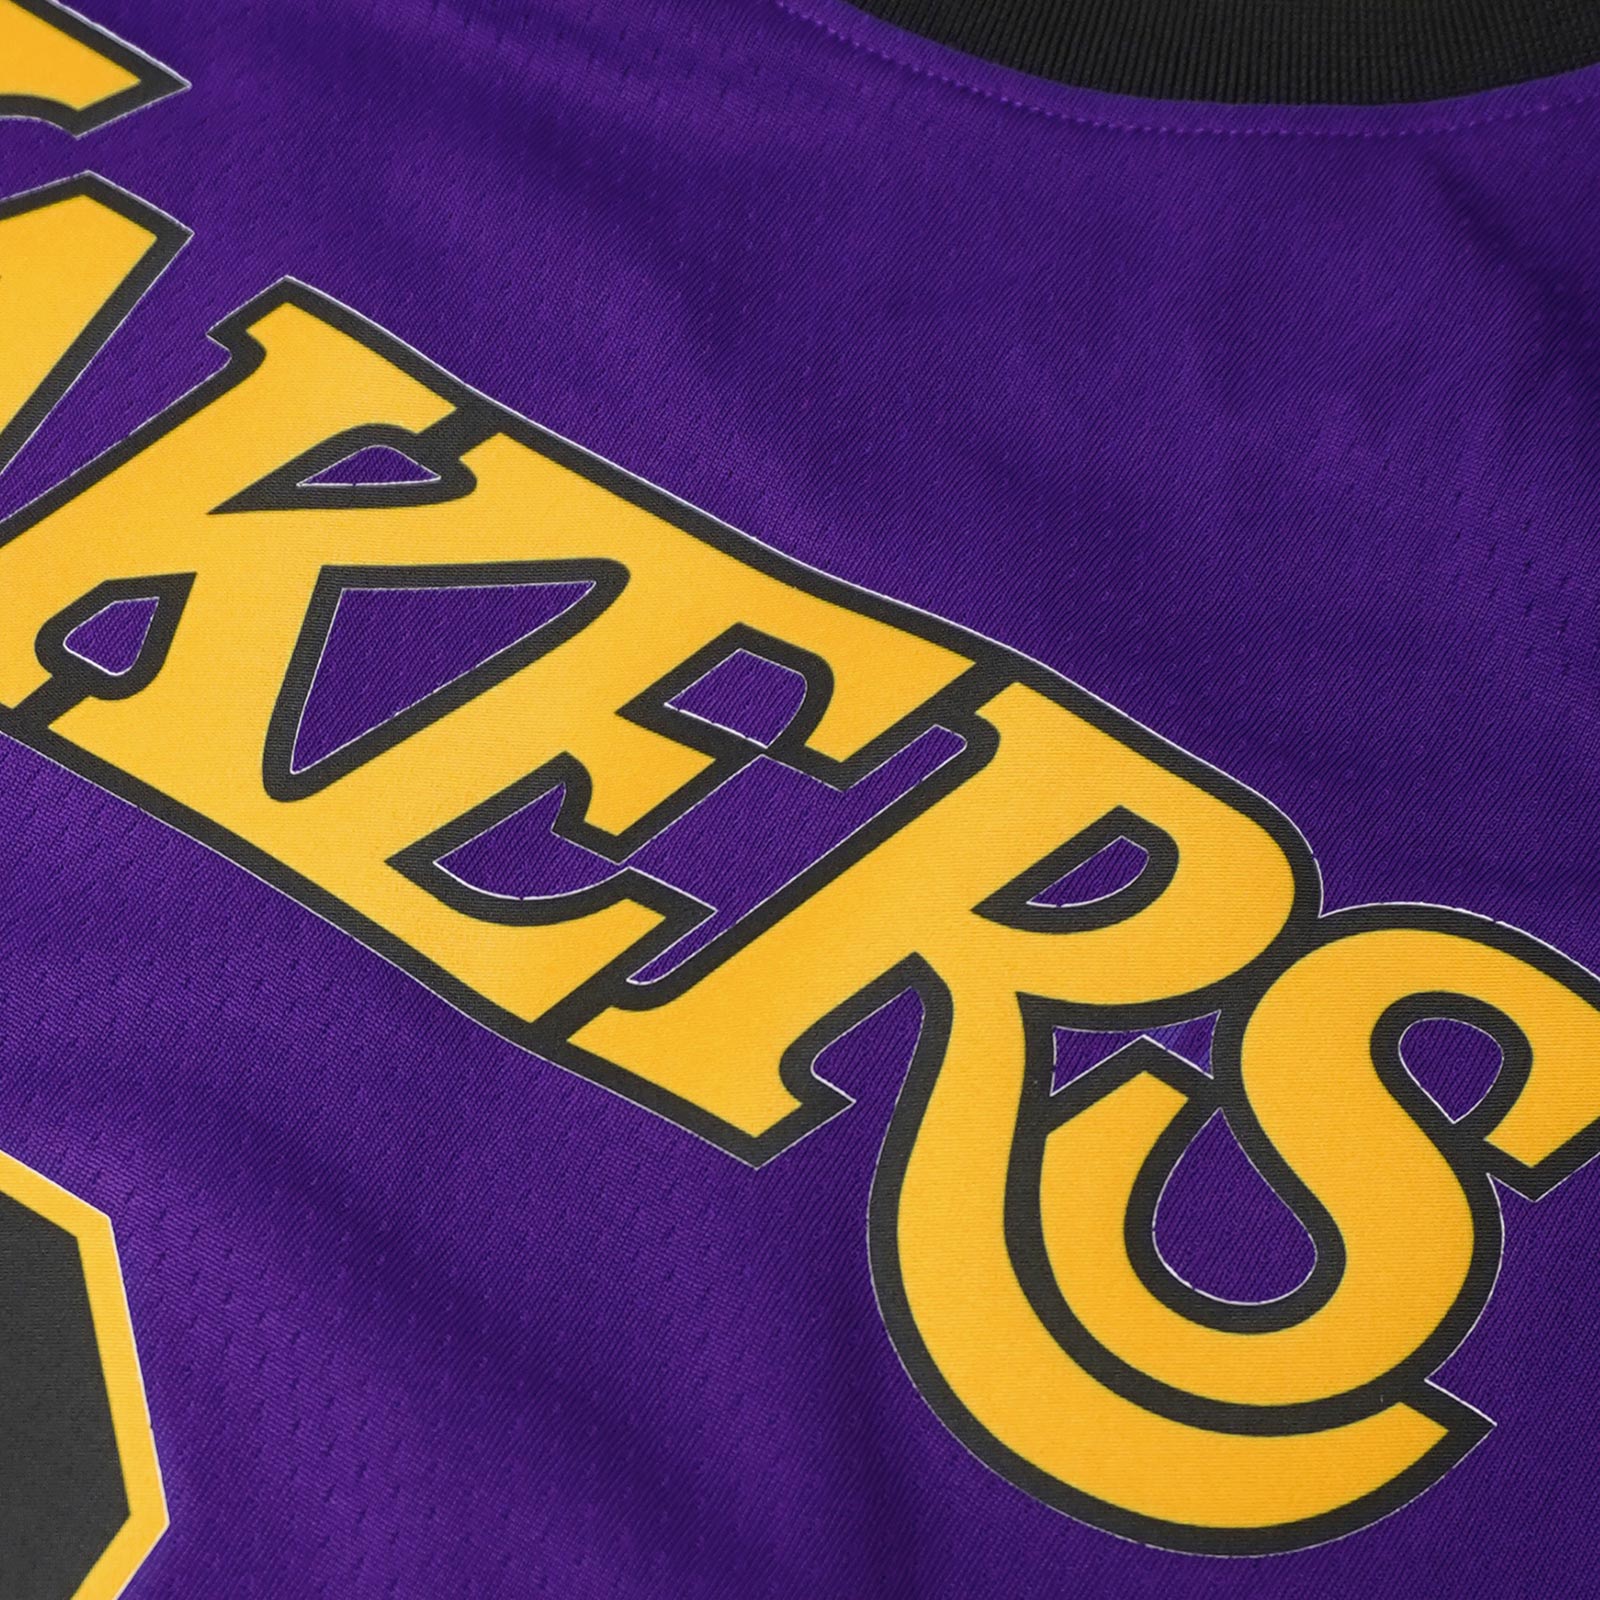 Lakers release new purple 'Statement Edition' jerseys